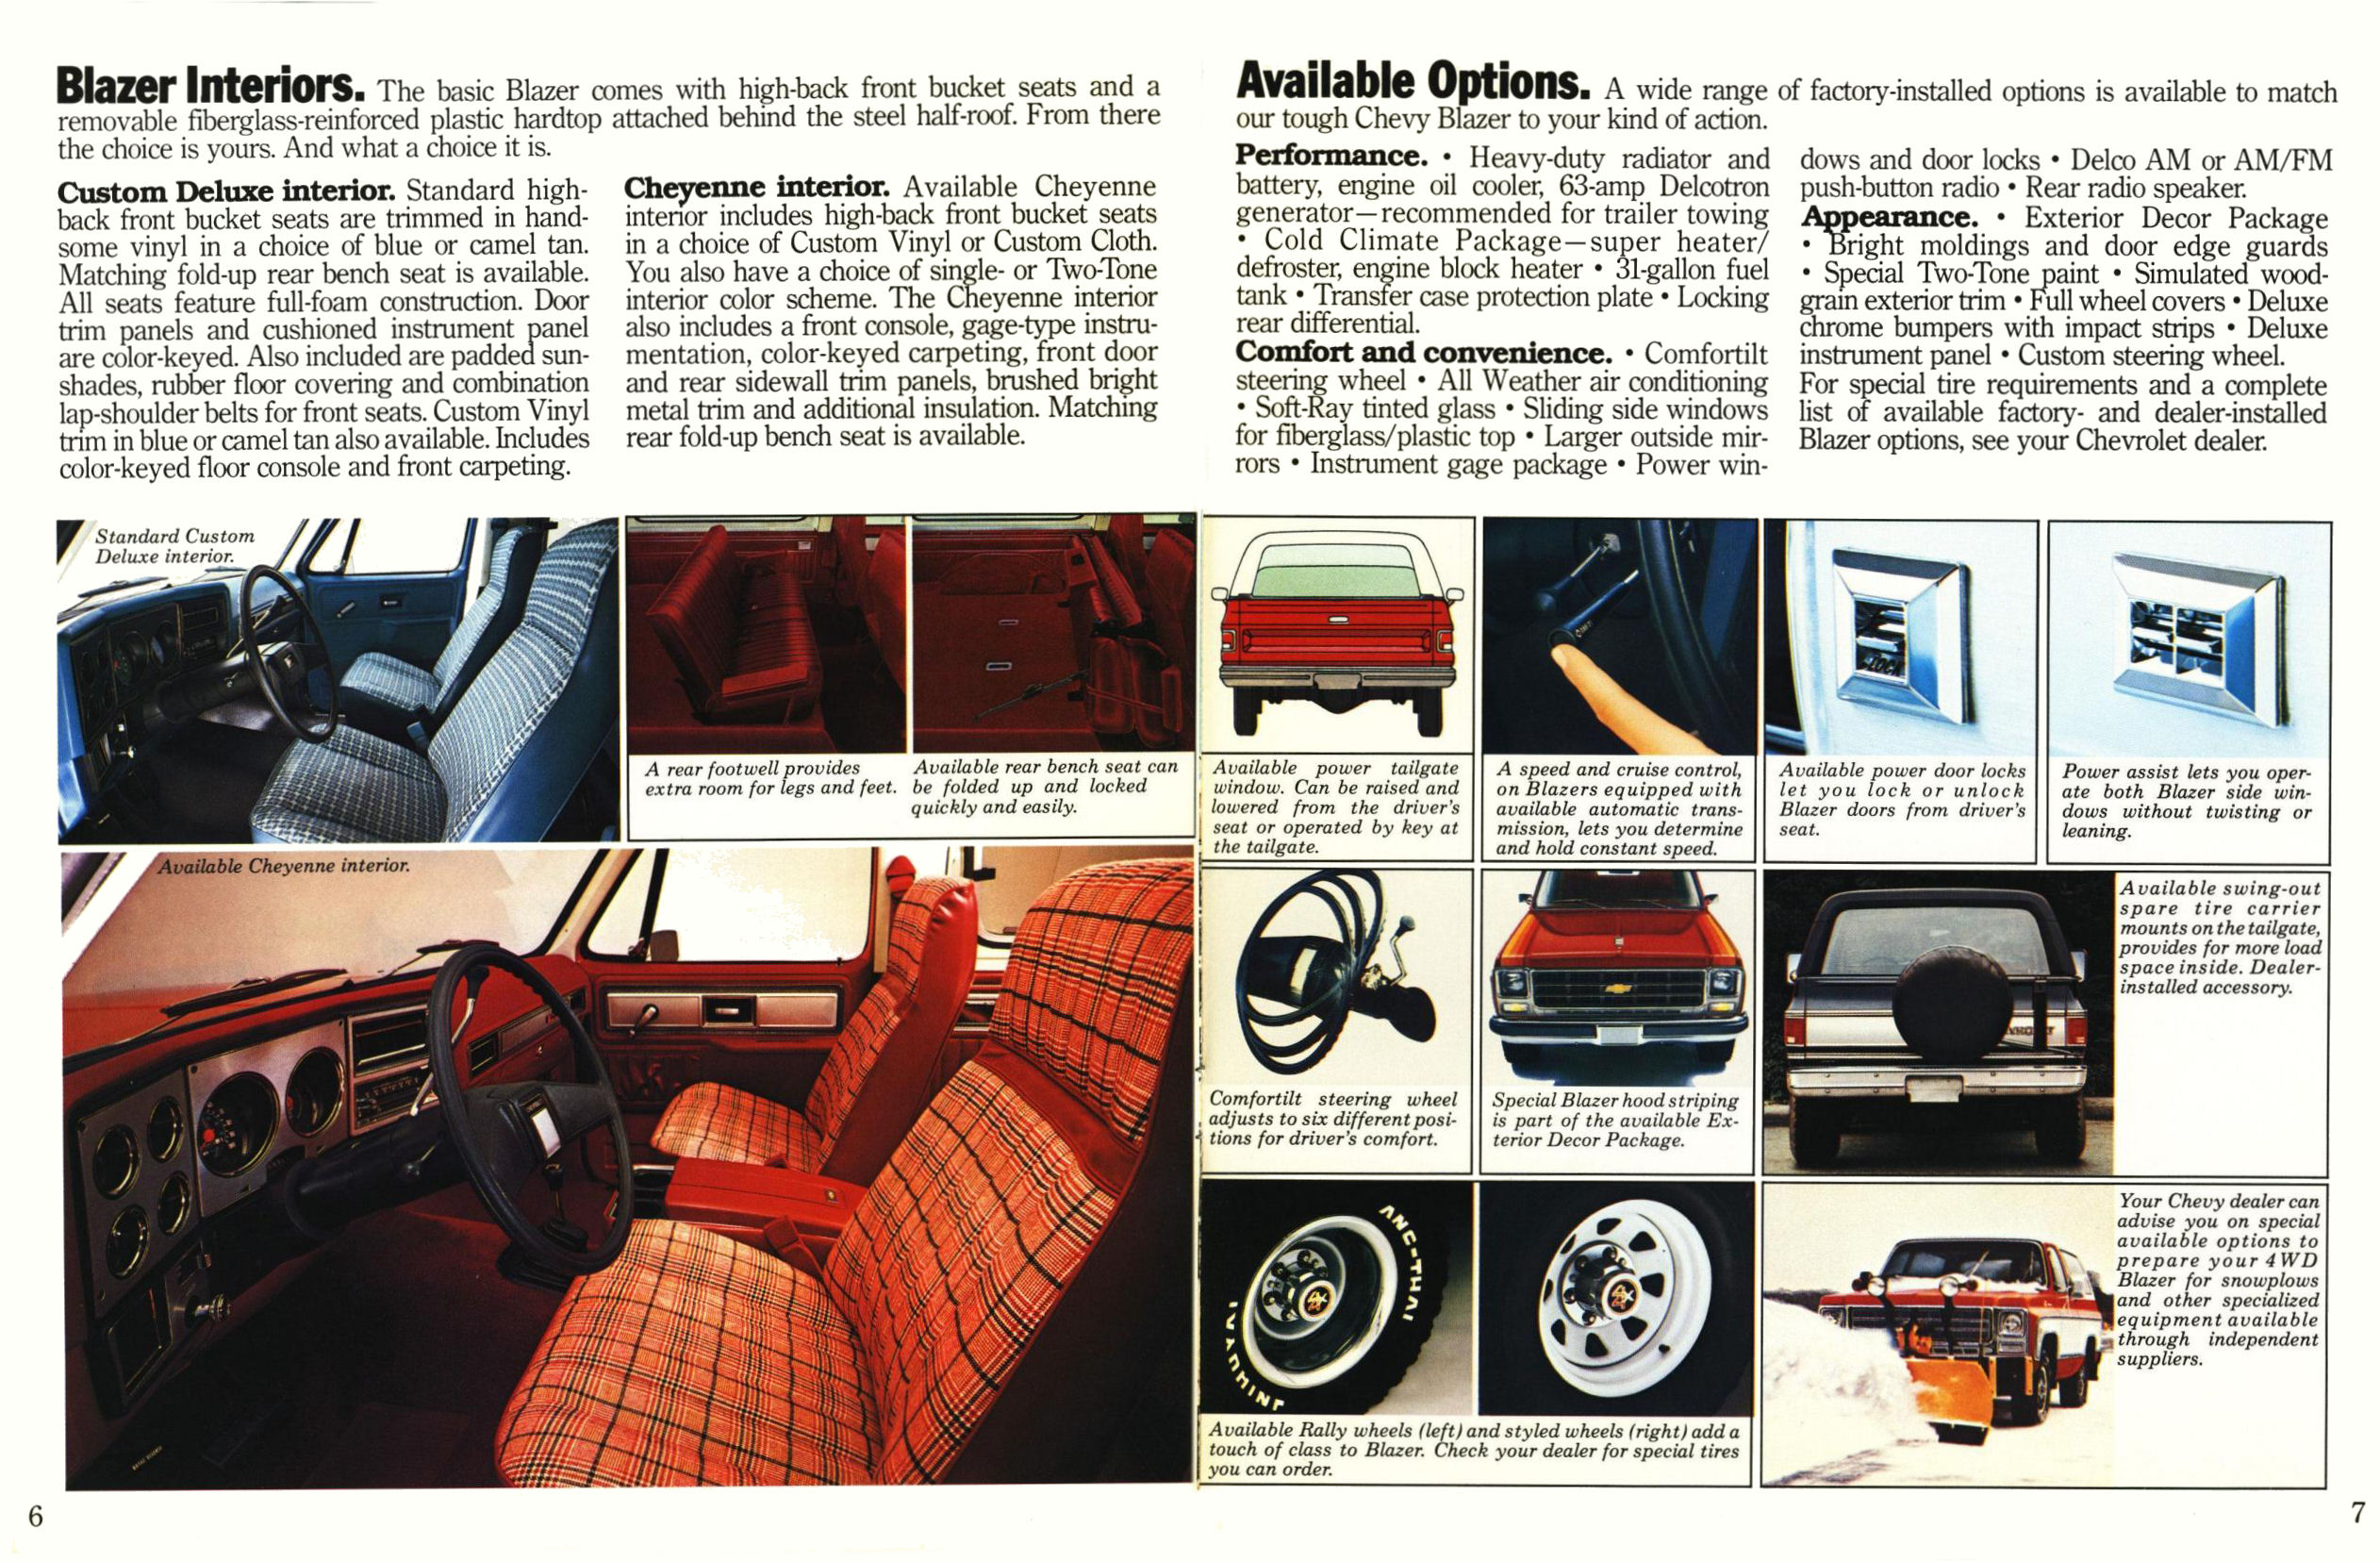 1979 Chevrolet Blazer Brochure Page 2